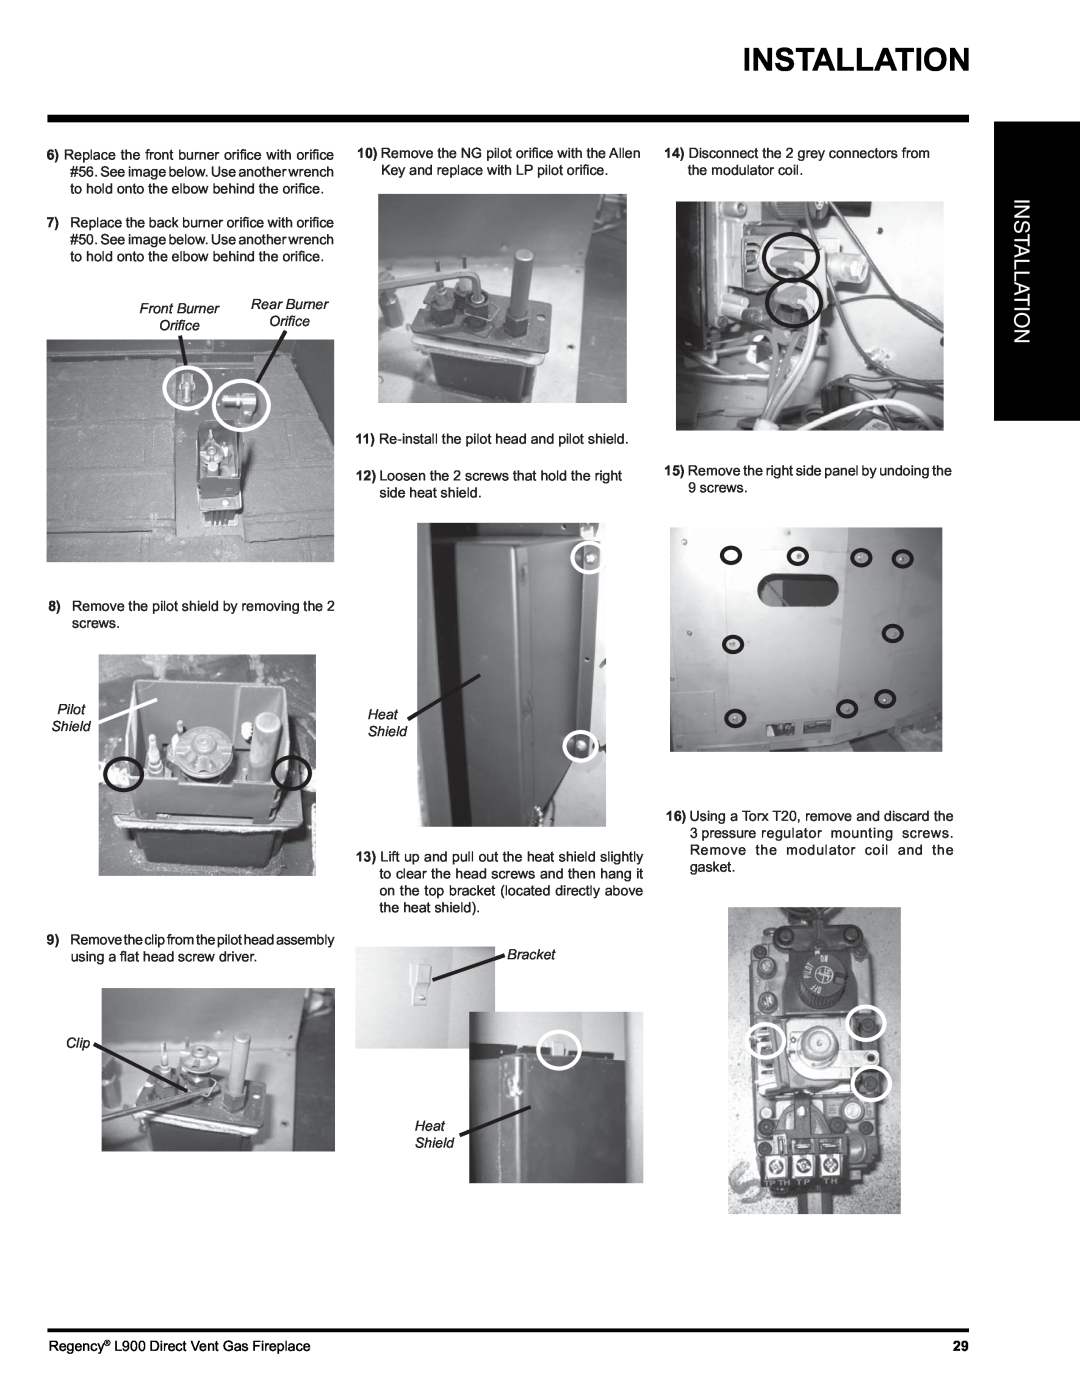 Regency L900-NG, L900-LP installation manual Installation, Pilot Shield, using a ﬂat head screw driver, Clip Heat Shield 